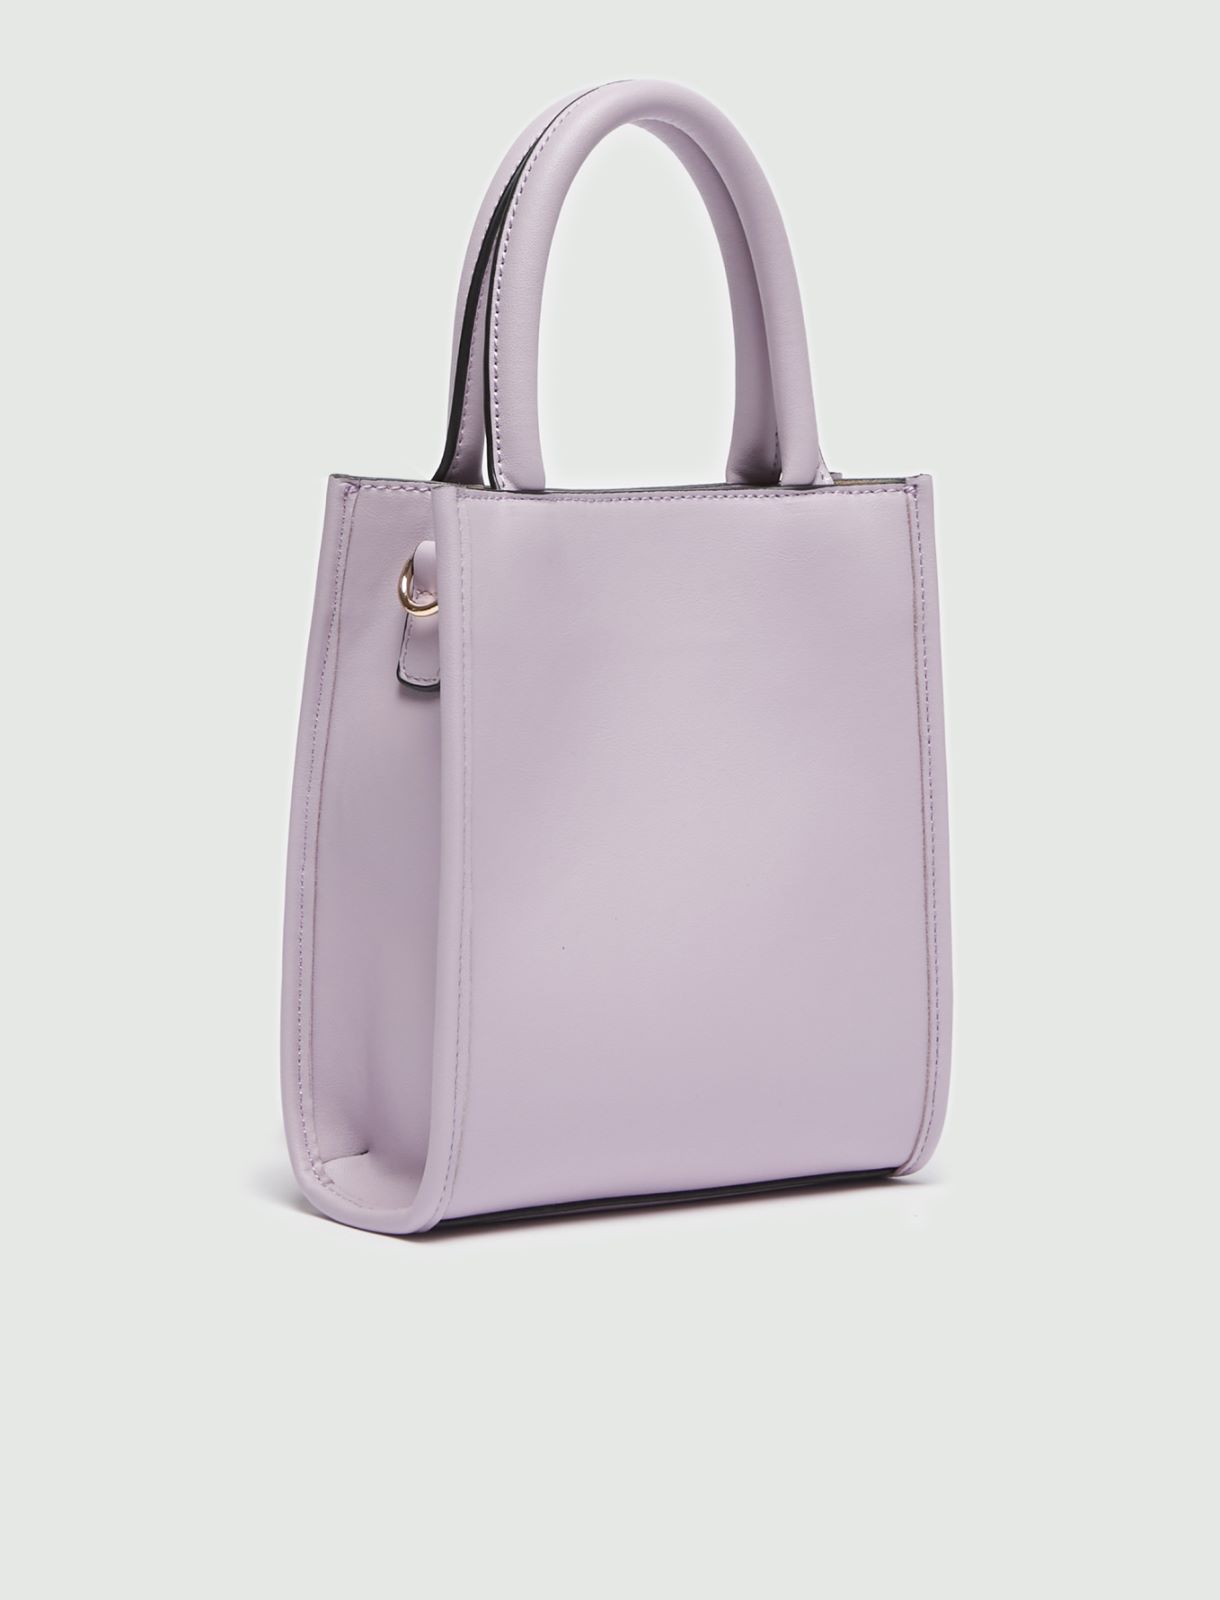 Small bag - Lilac - Marella - 2